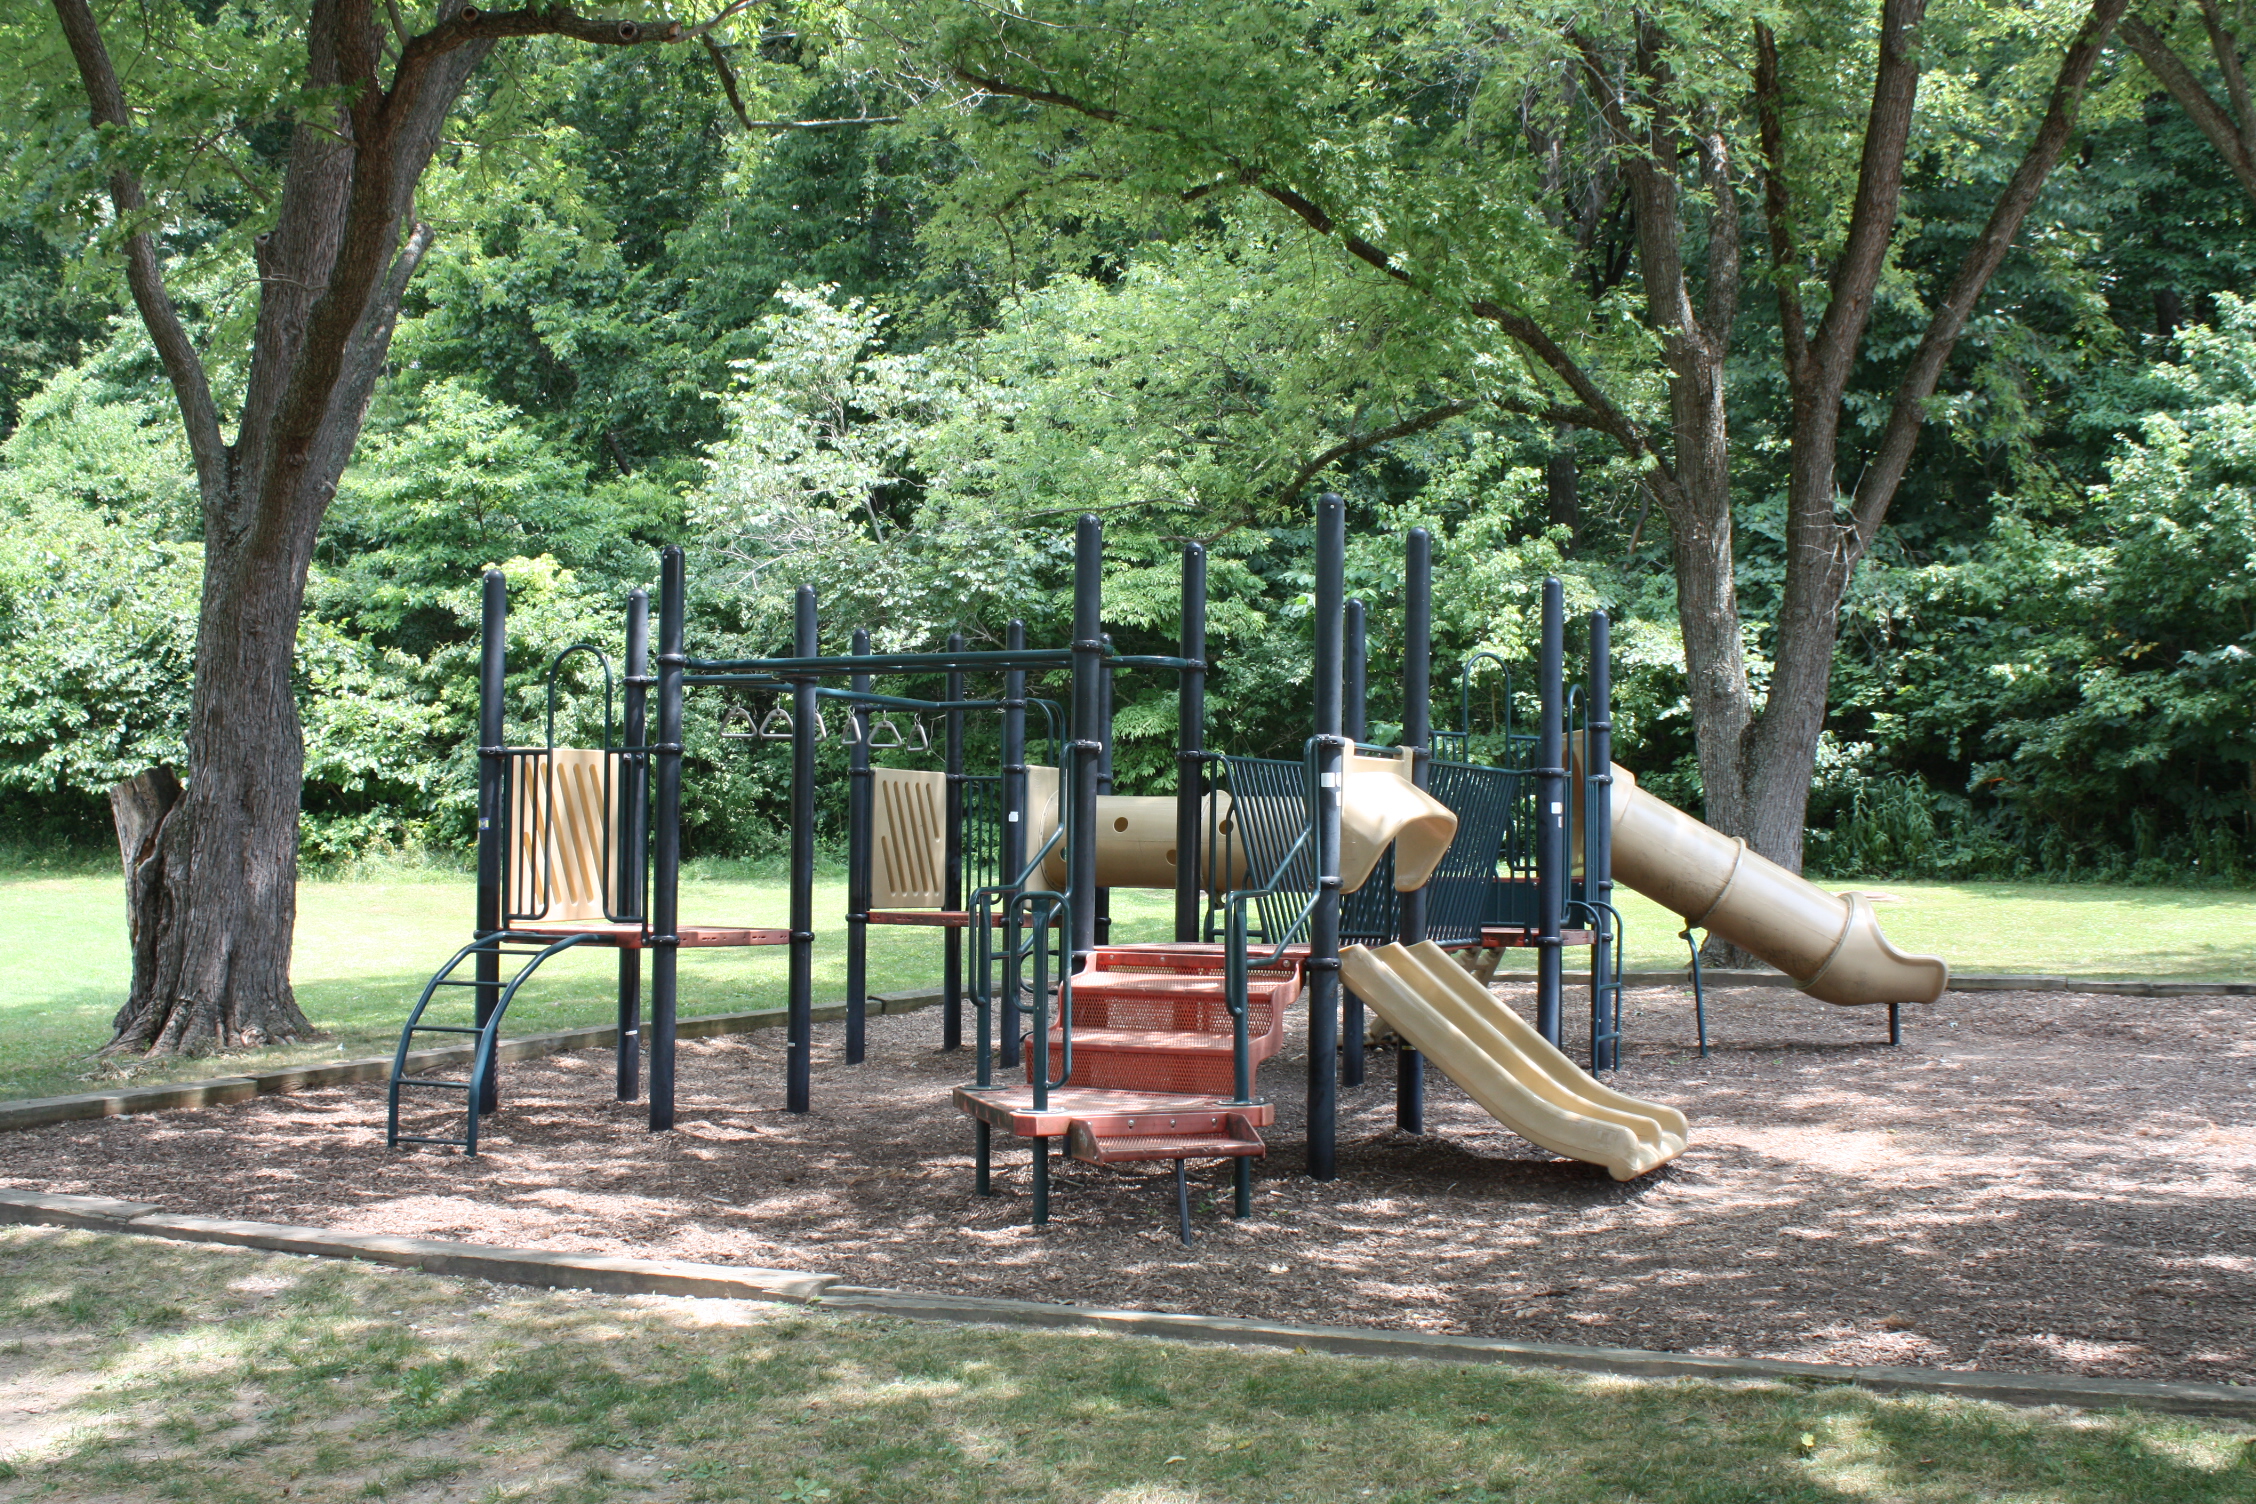 playground equipment with slides